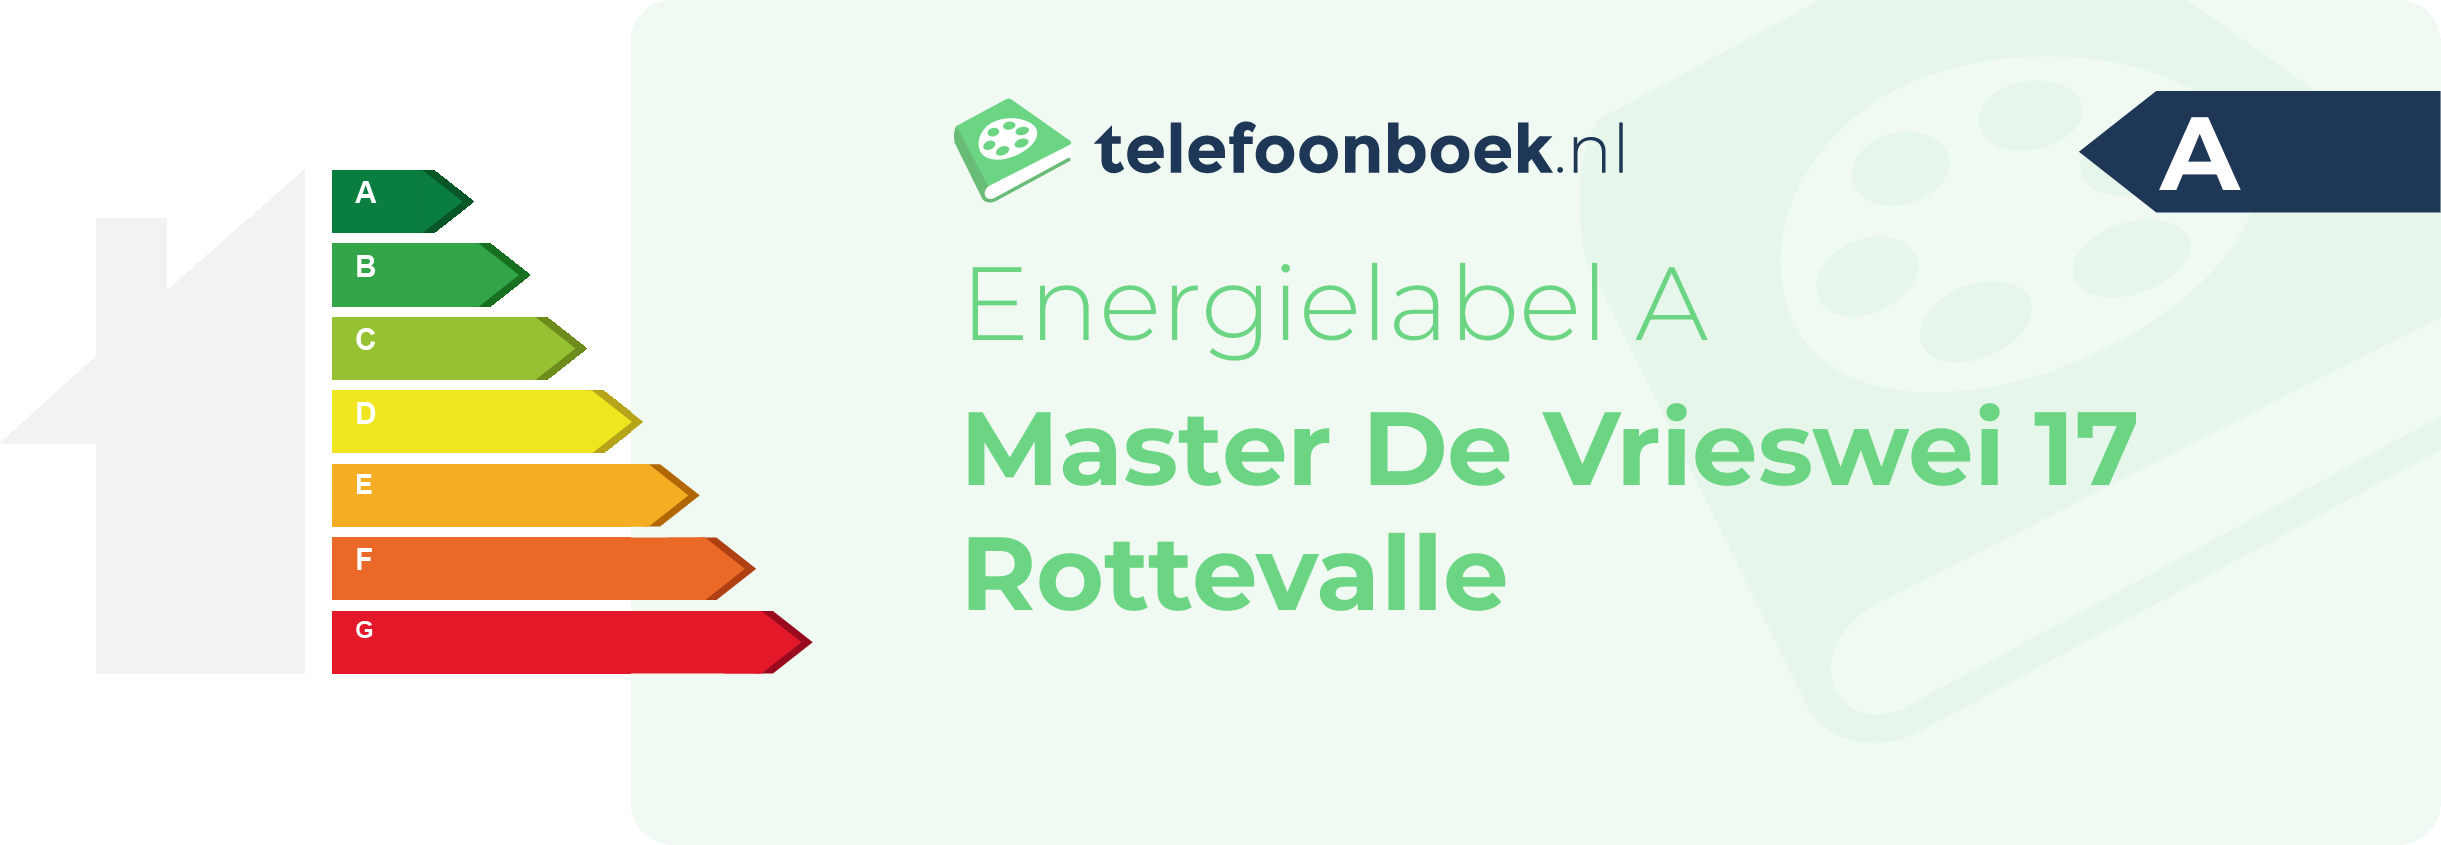 Energielabel Master De Vrieswei 17 Rottevalle